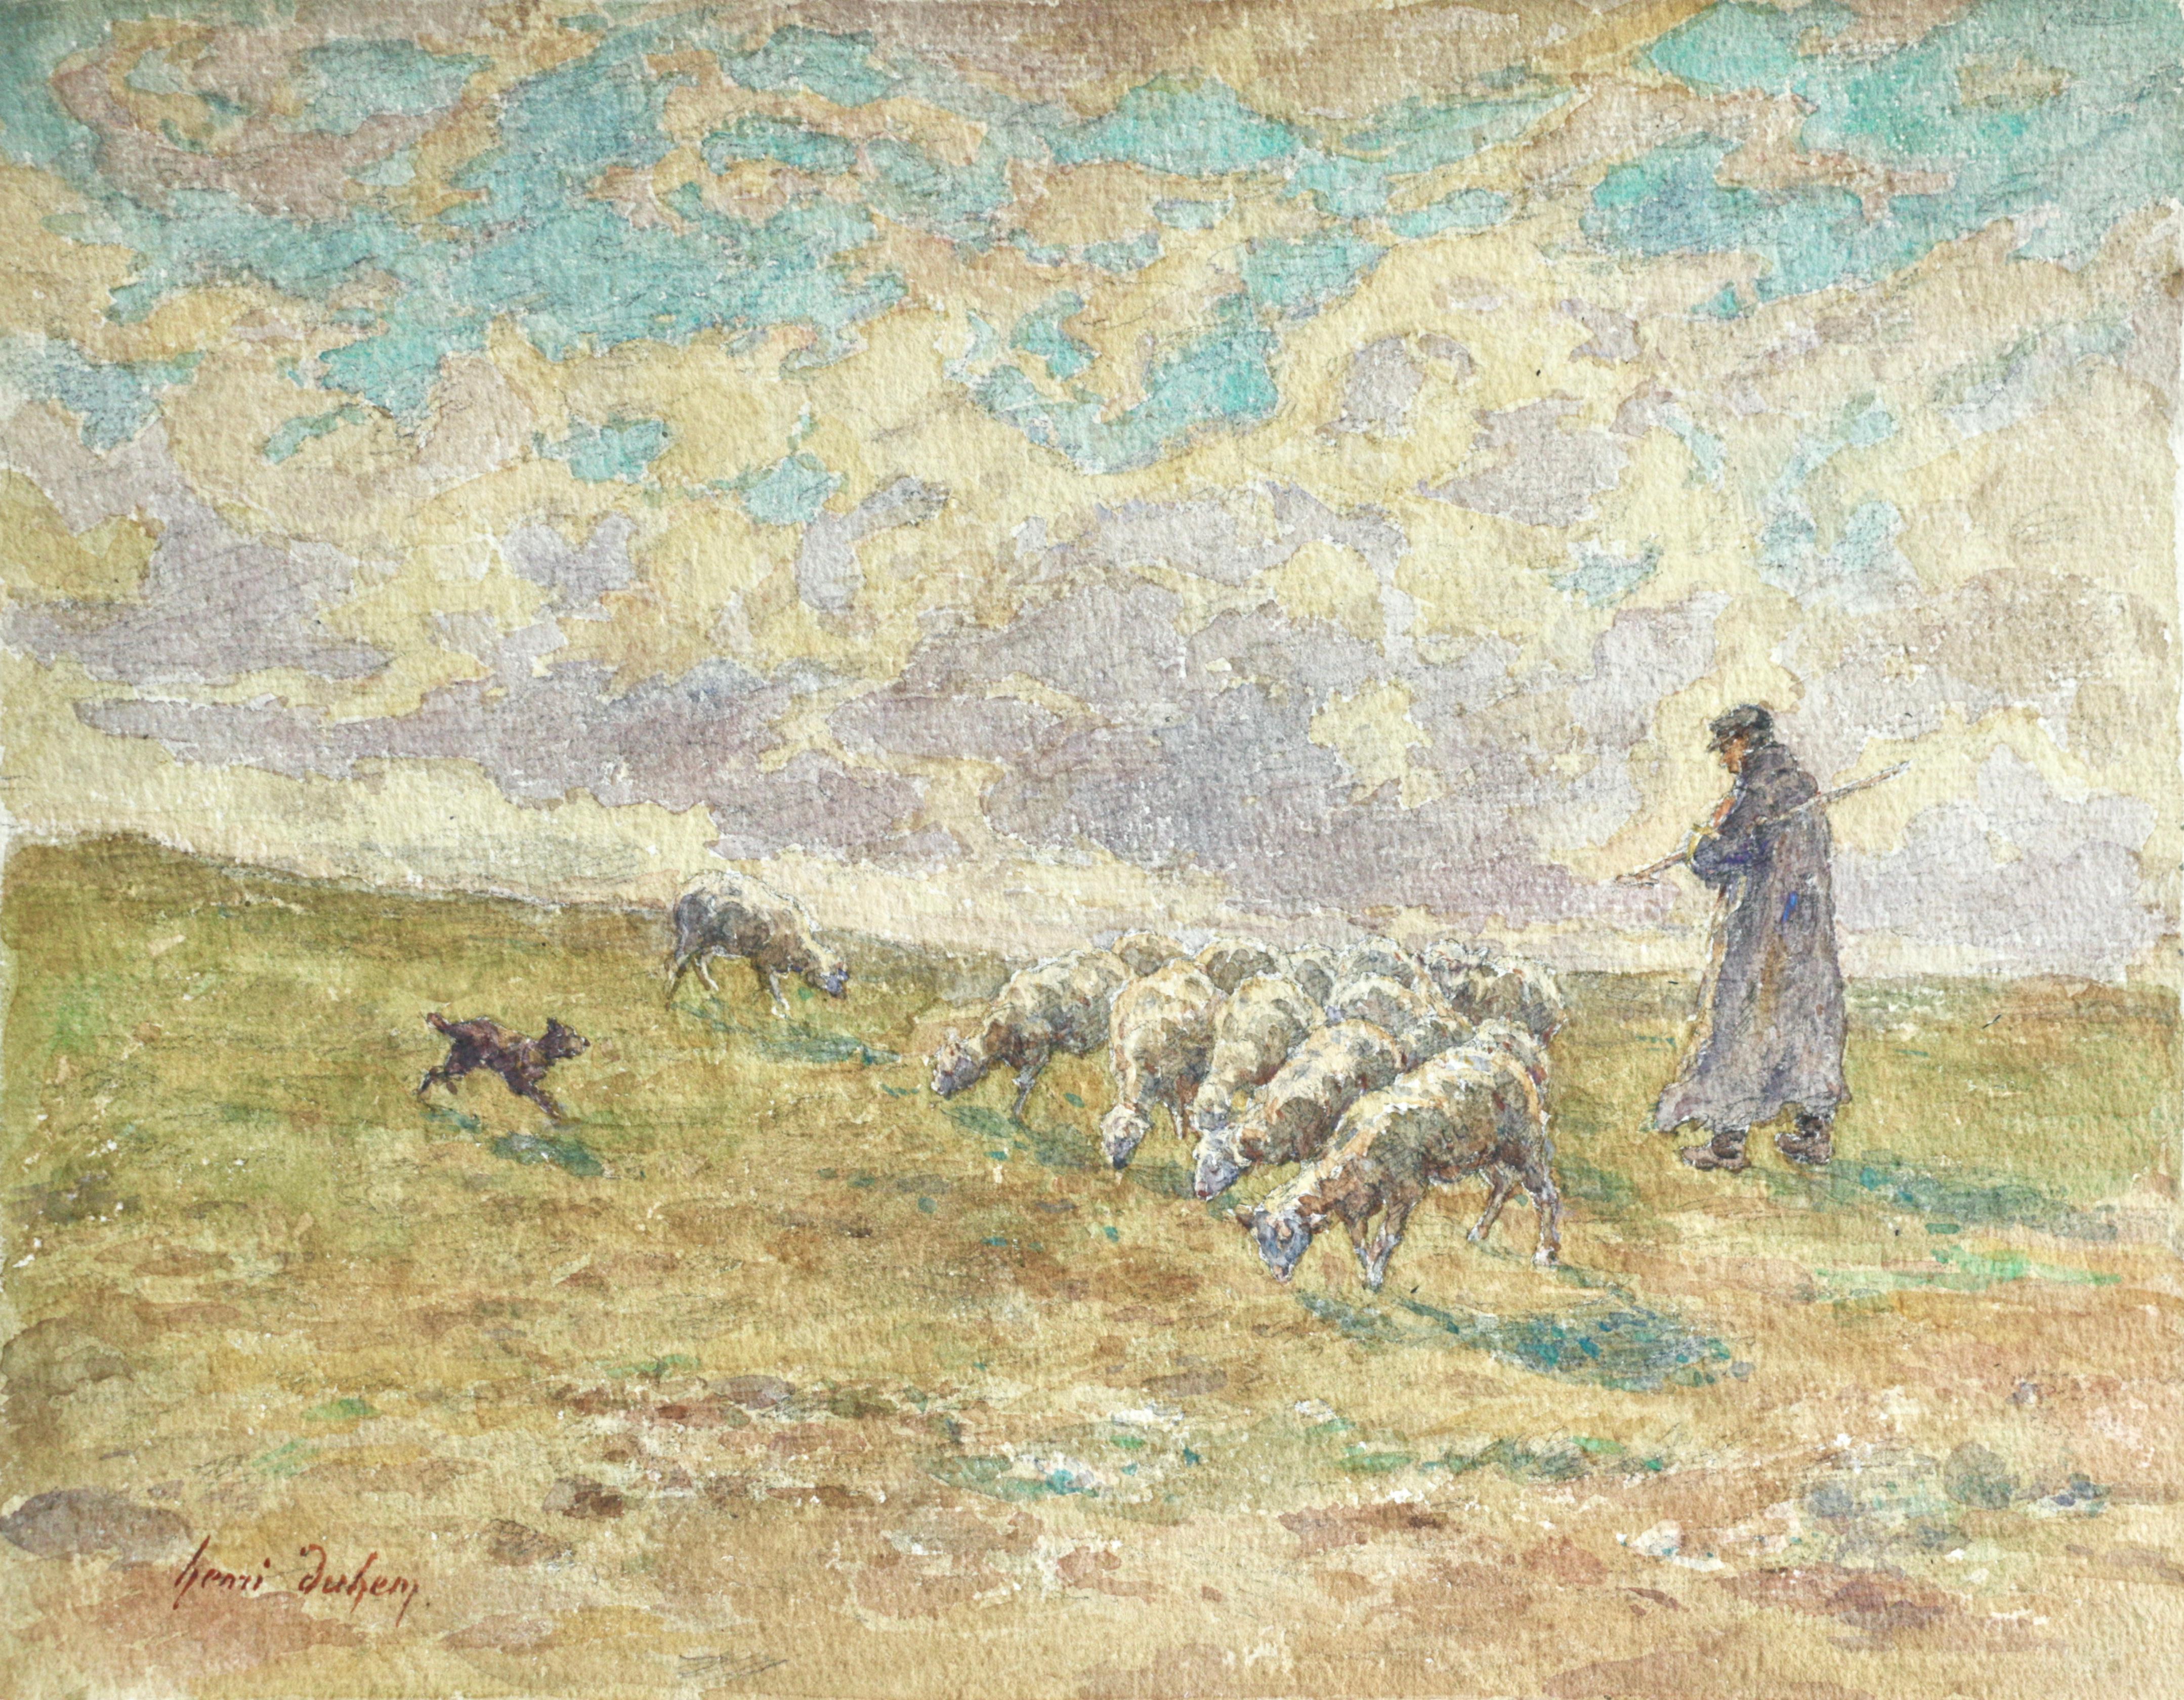 Henri Duhem Landscape Art - Sheep Droving - 19th Century Watercolor, Shepherd & Flock in Landscape by Duhem